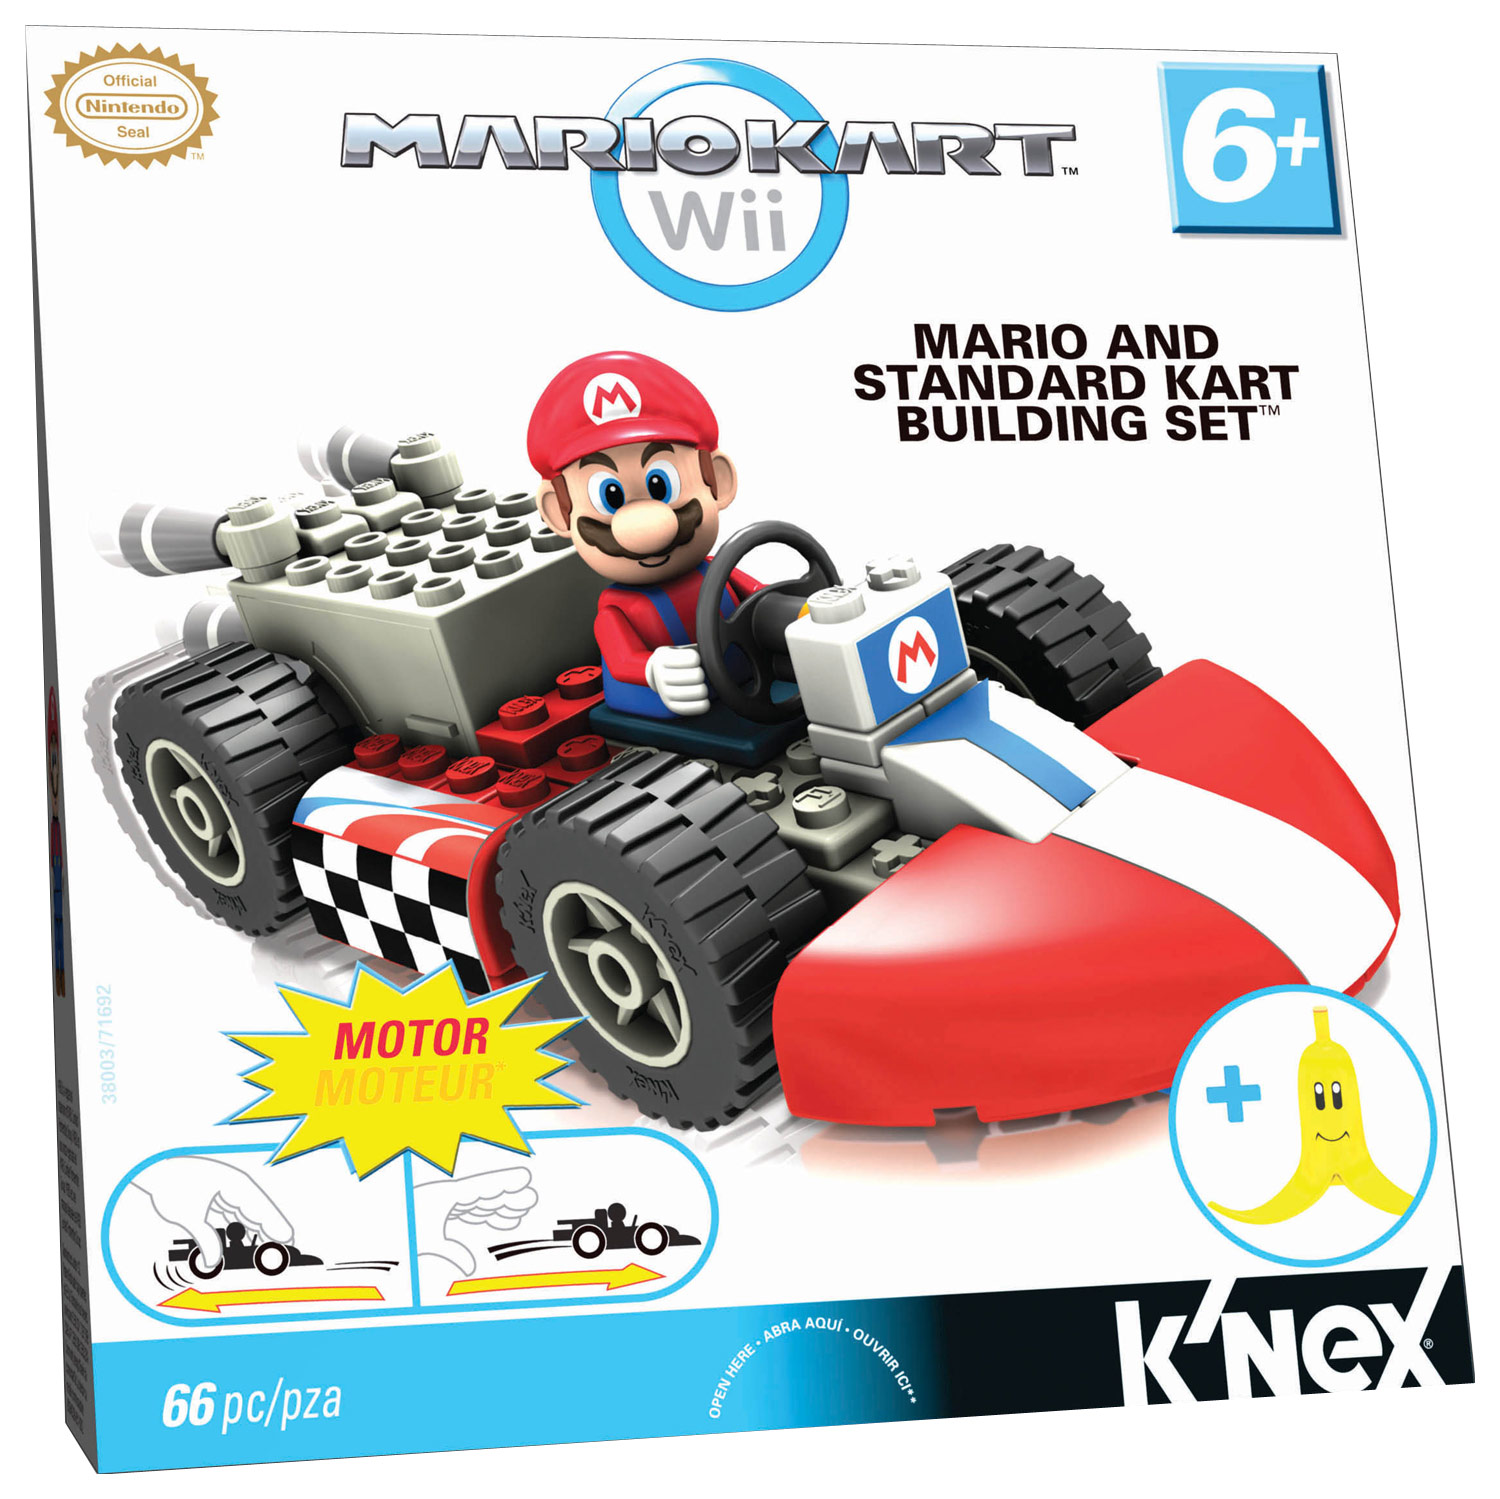 Mario Kart Wii, Mario